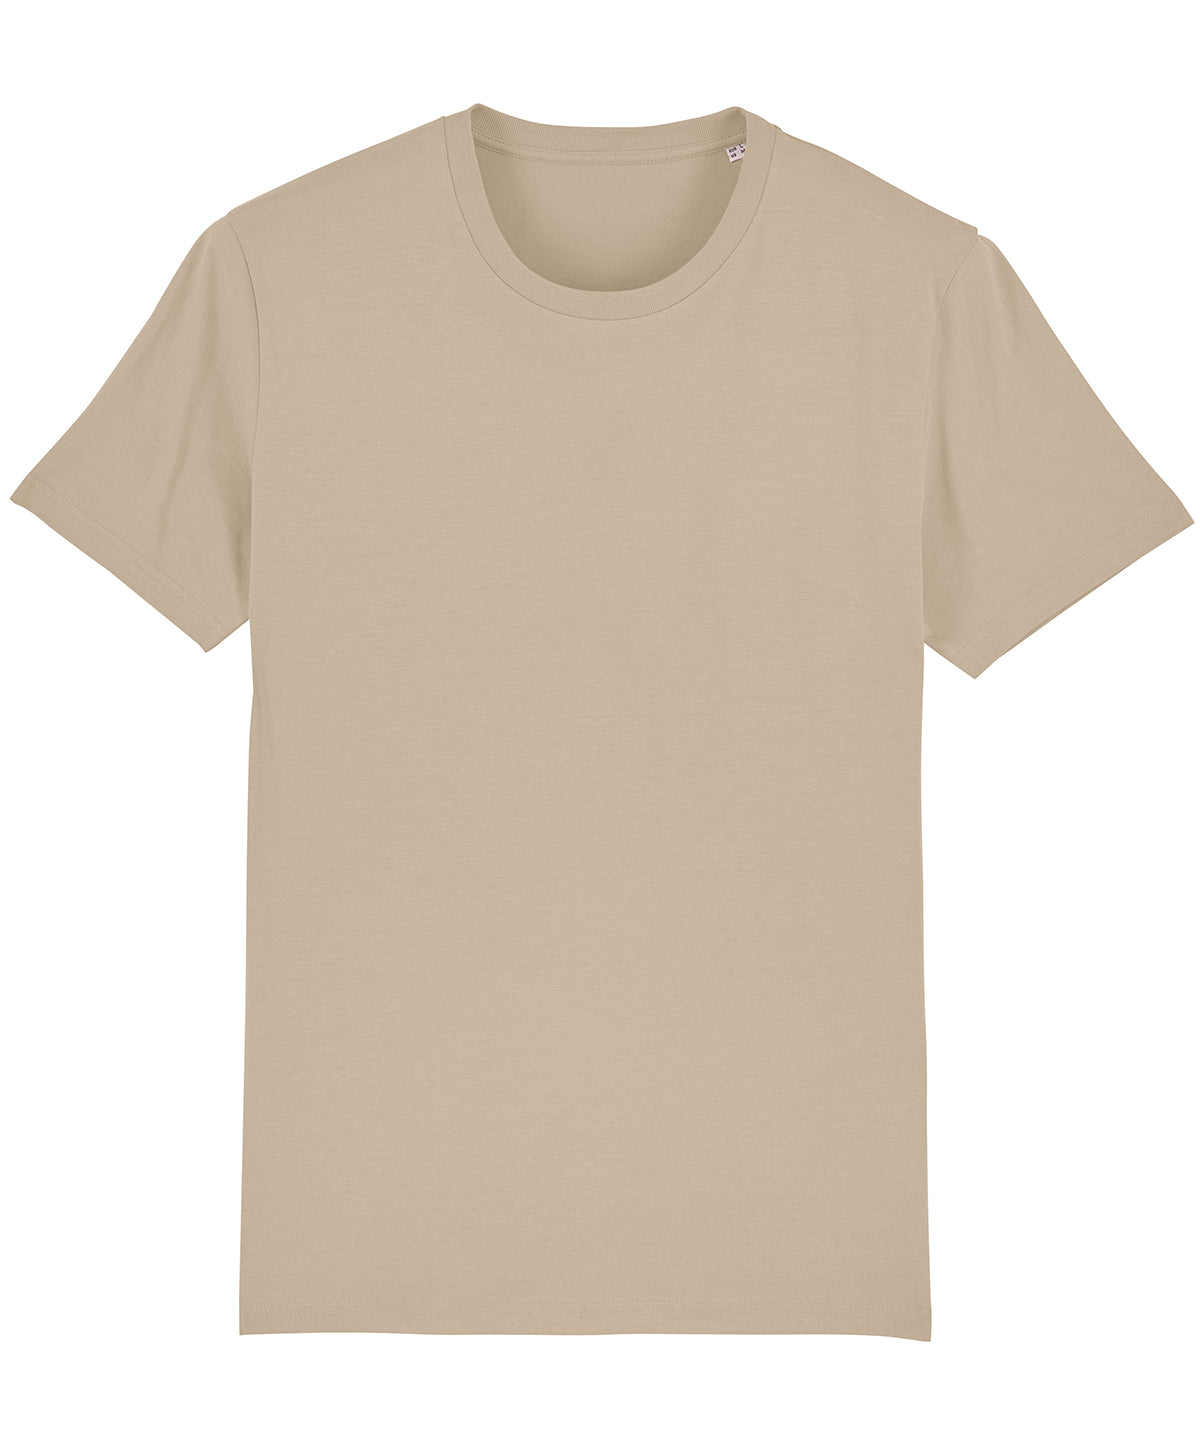 SAMPLE SALE Santa Robin T-Shirt, White L, Nude S, M, XL